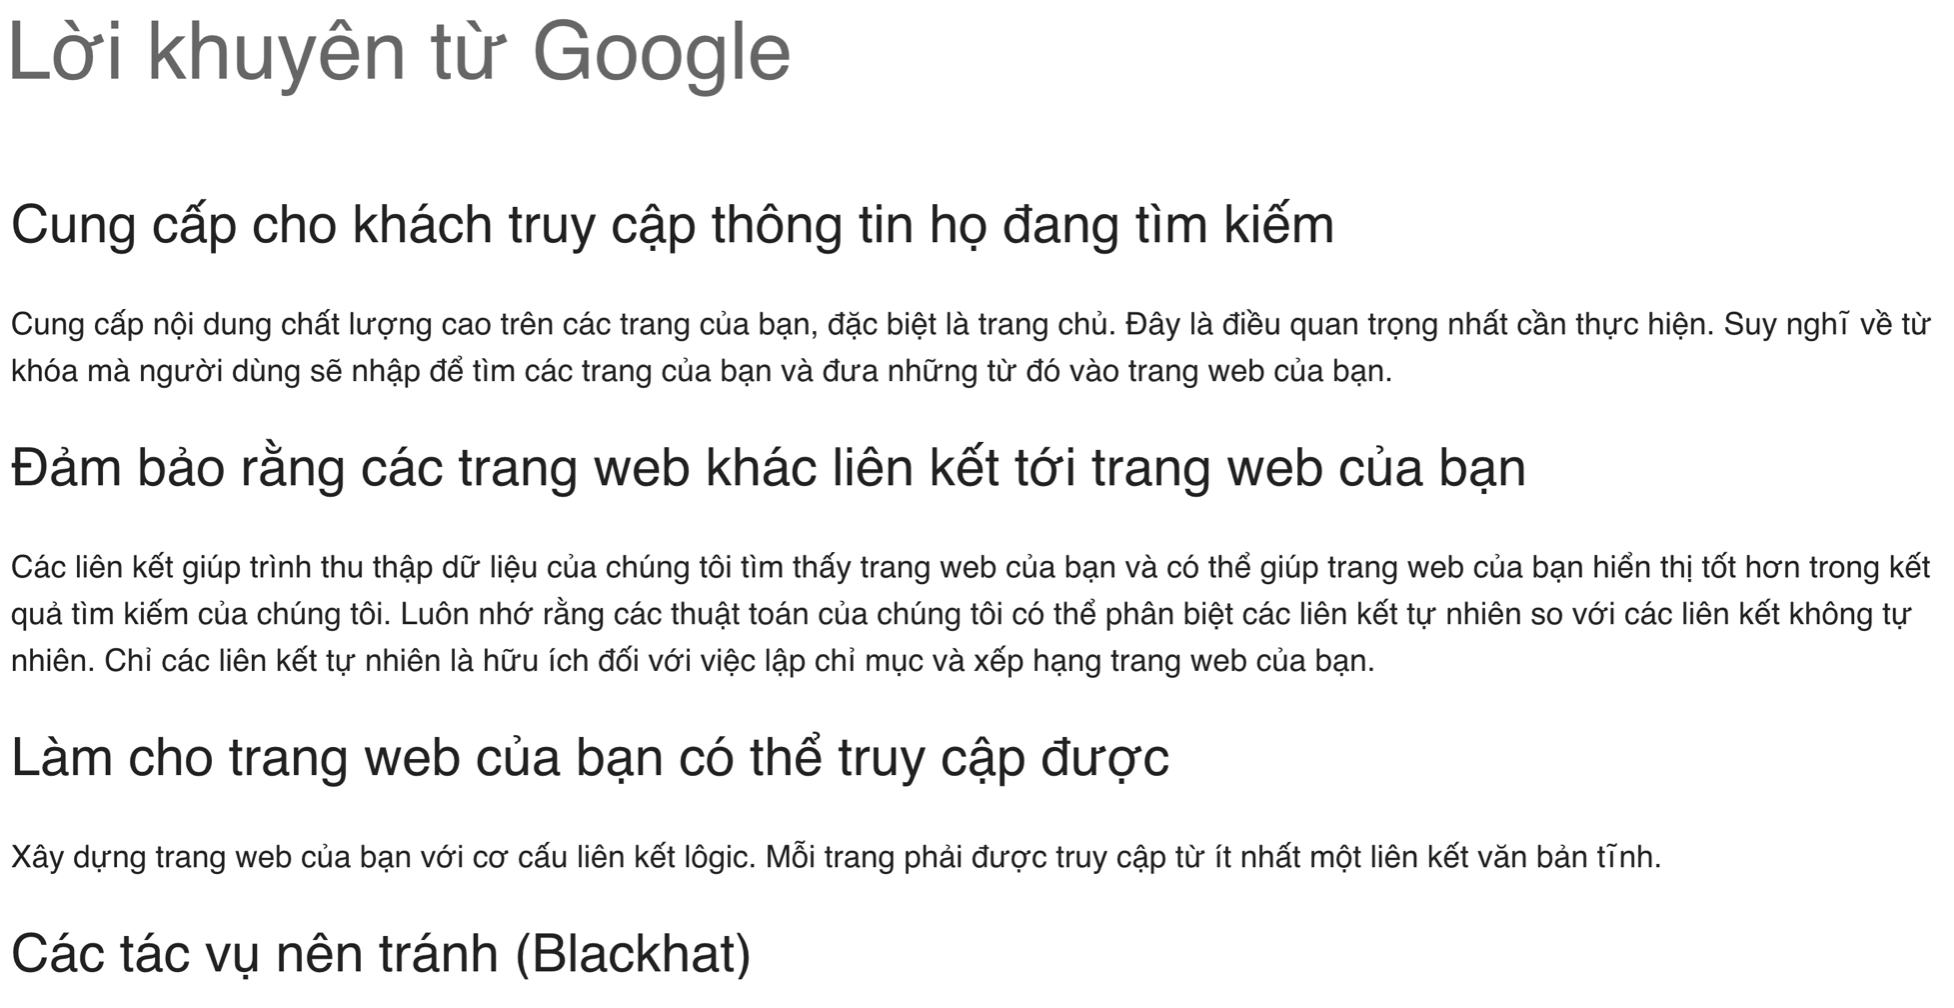 lời khuyên thiết kế website chuẩn seo từ google